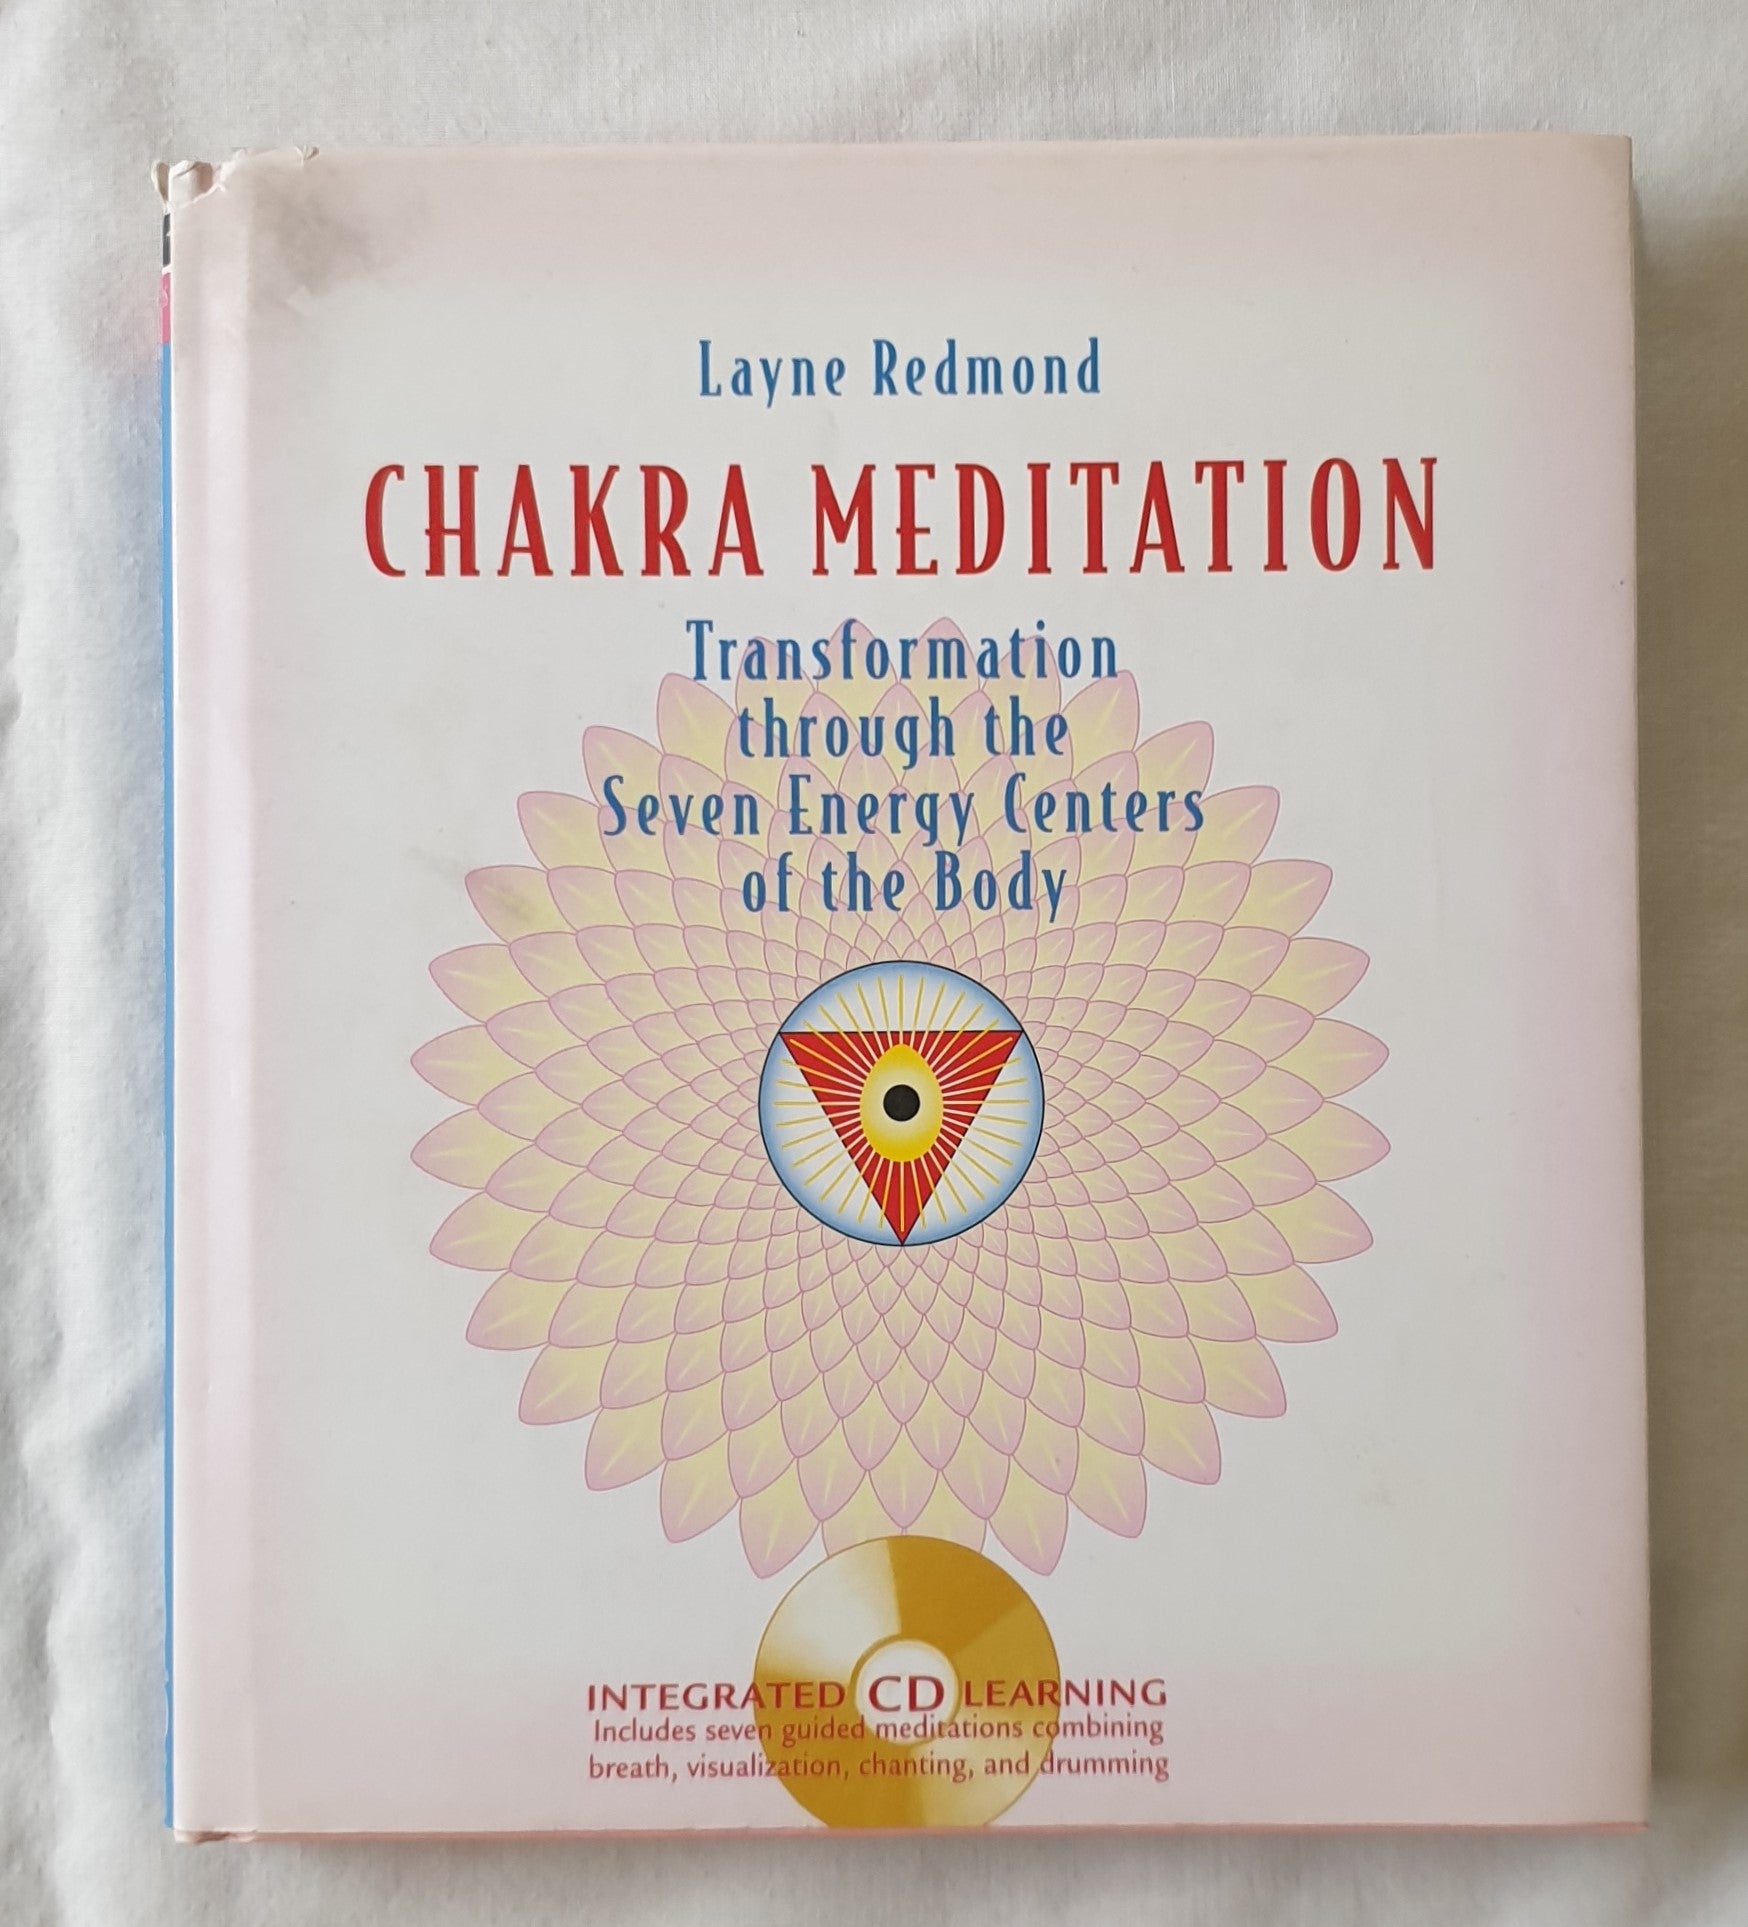 Chakra Mediation by Layne Redmond